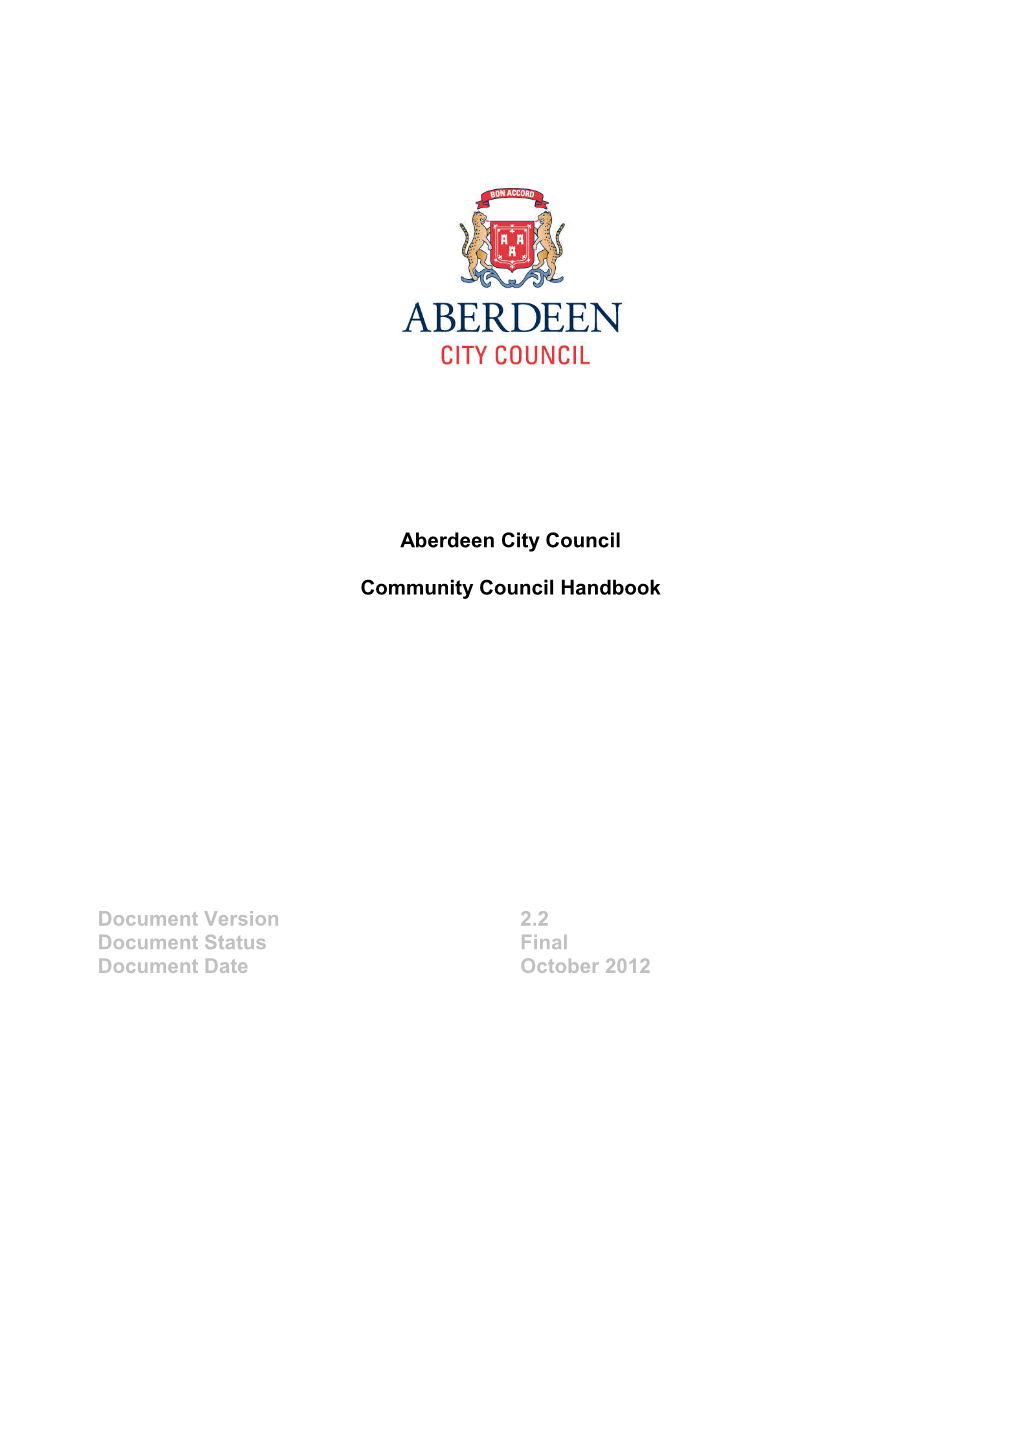 Aberdeen City Council Community Council Handbook Document Version 2.2 Document Status Final Document Date October 2012